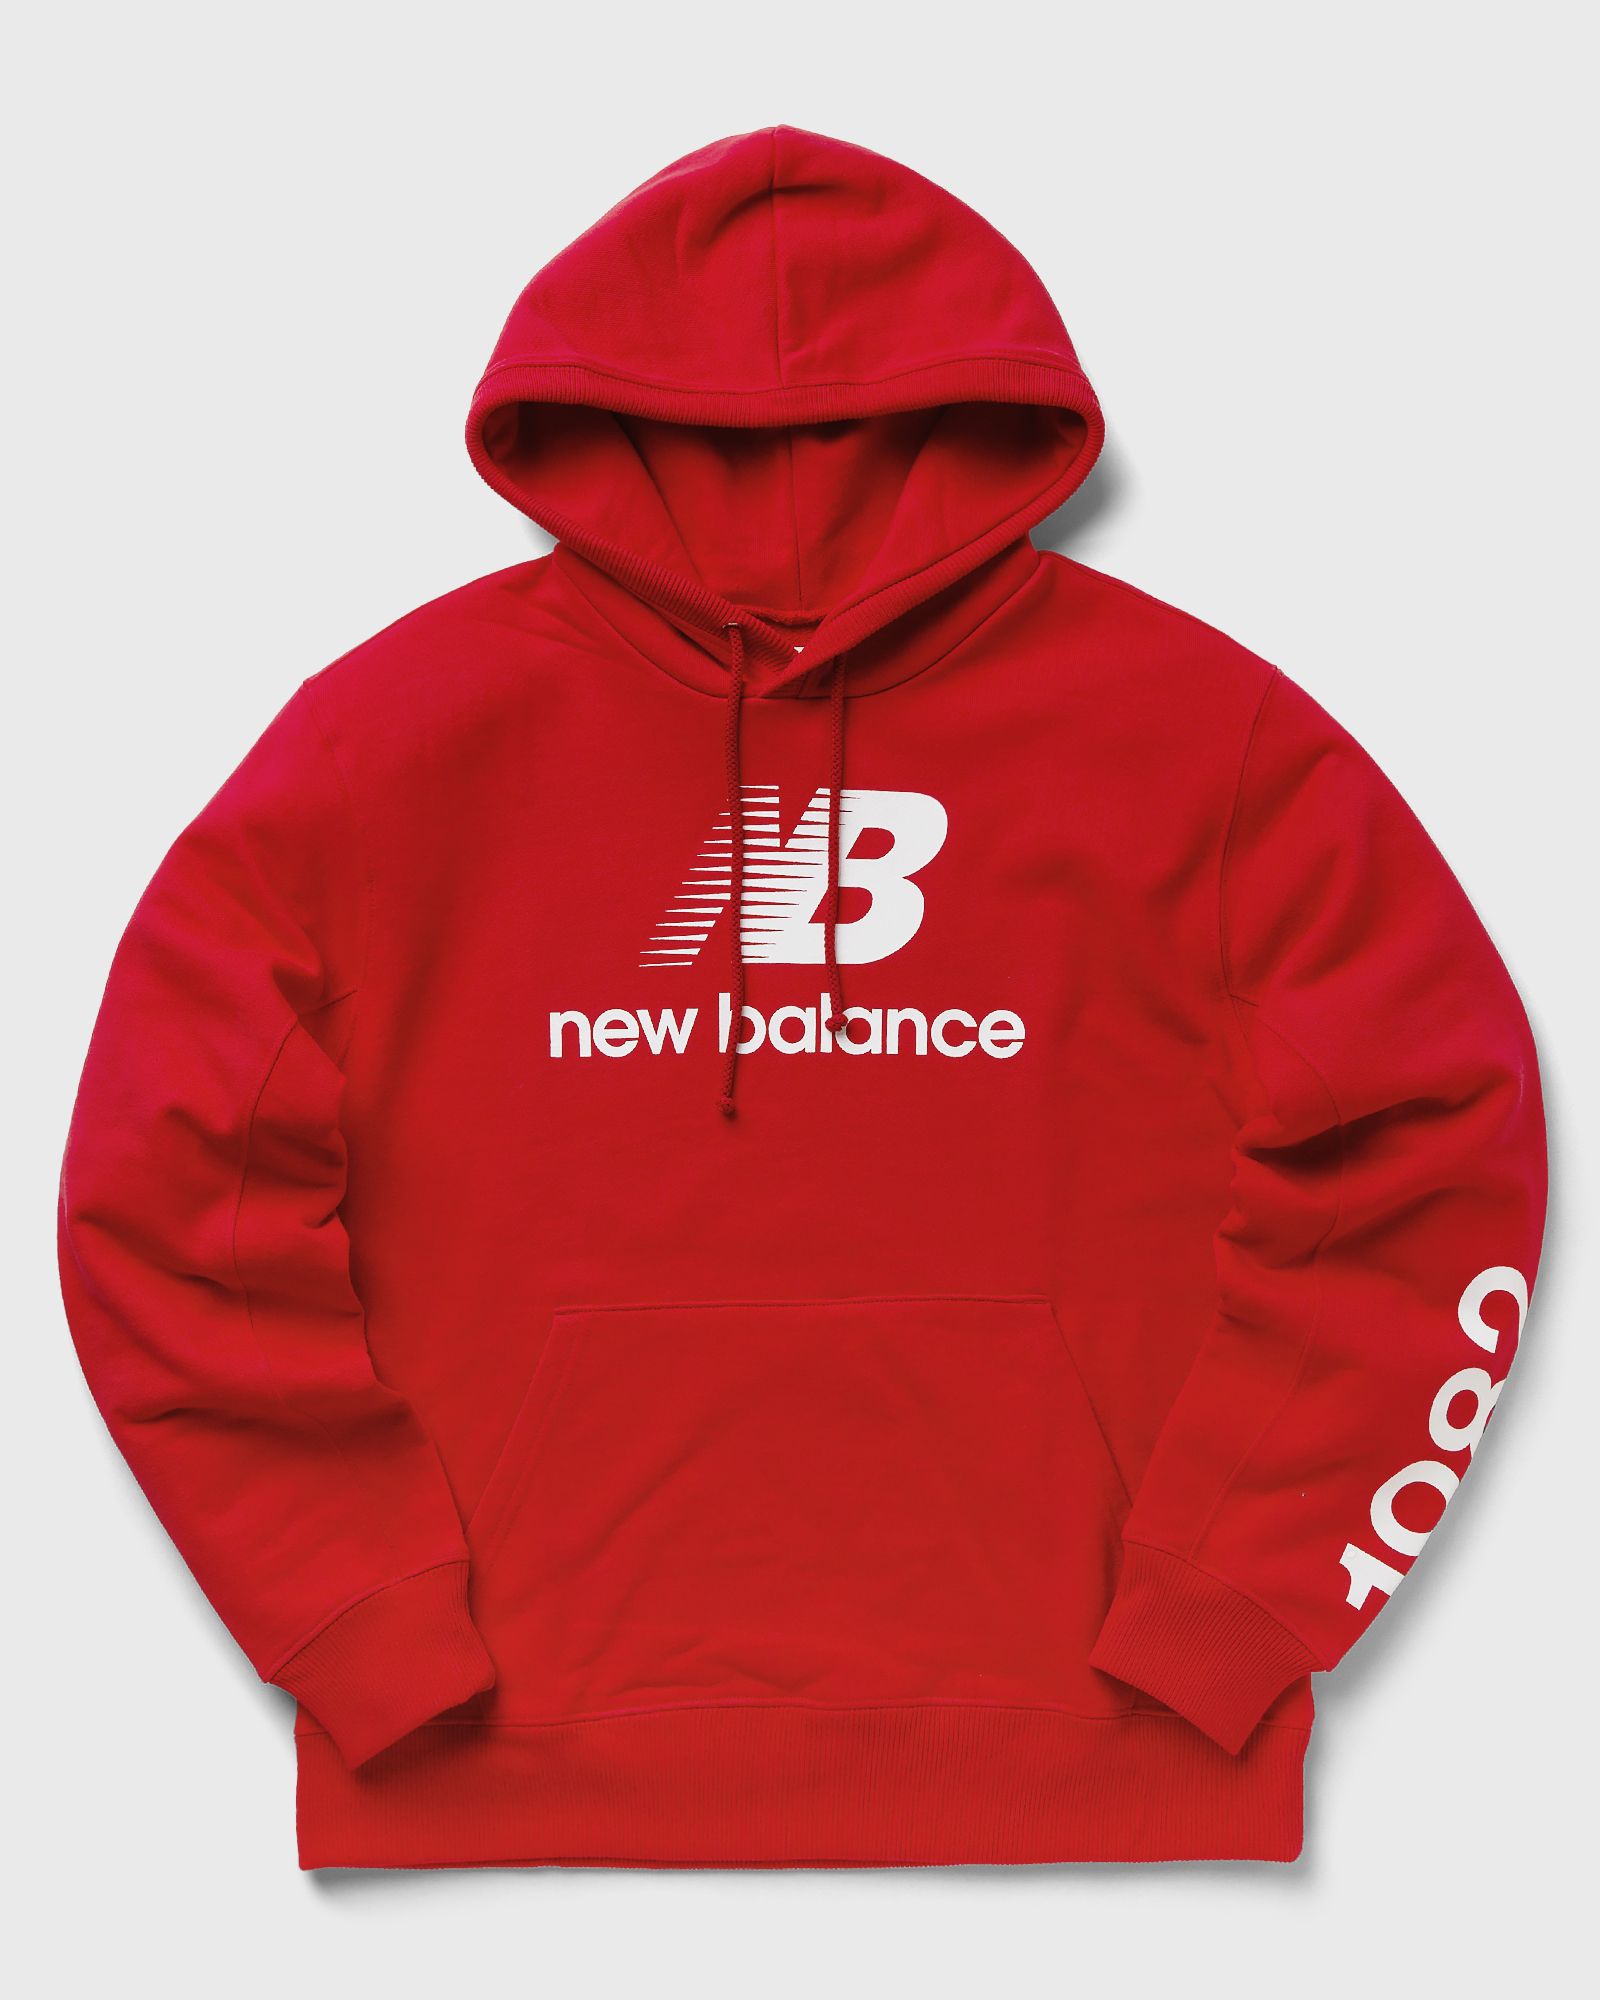 New Balance - made in usa hoodie men hoodies red in größe:s